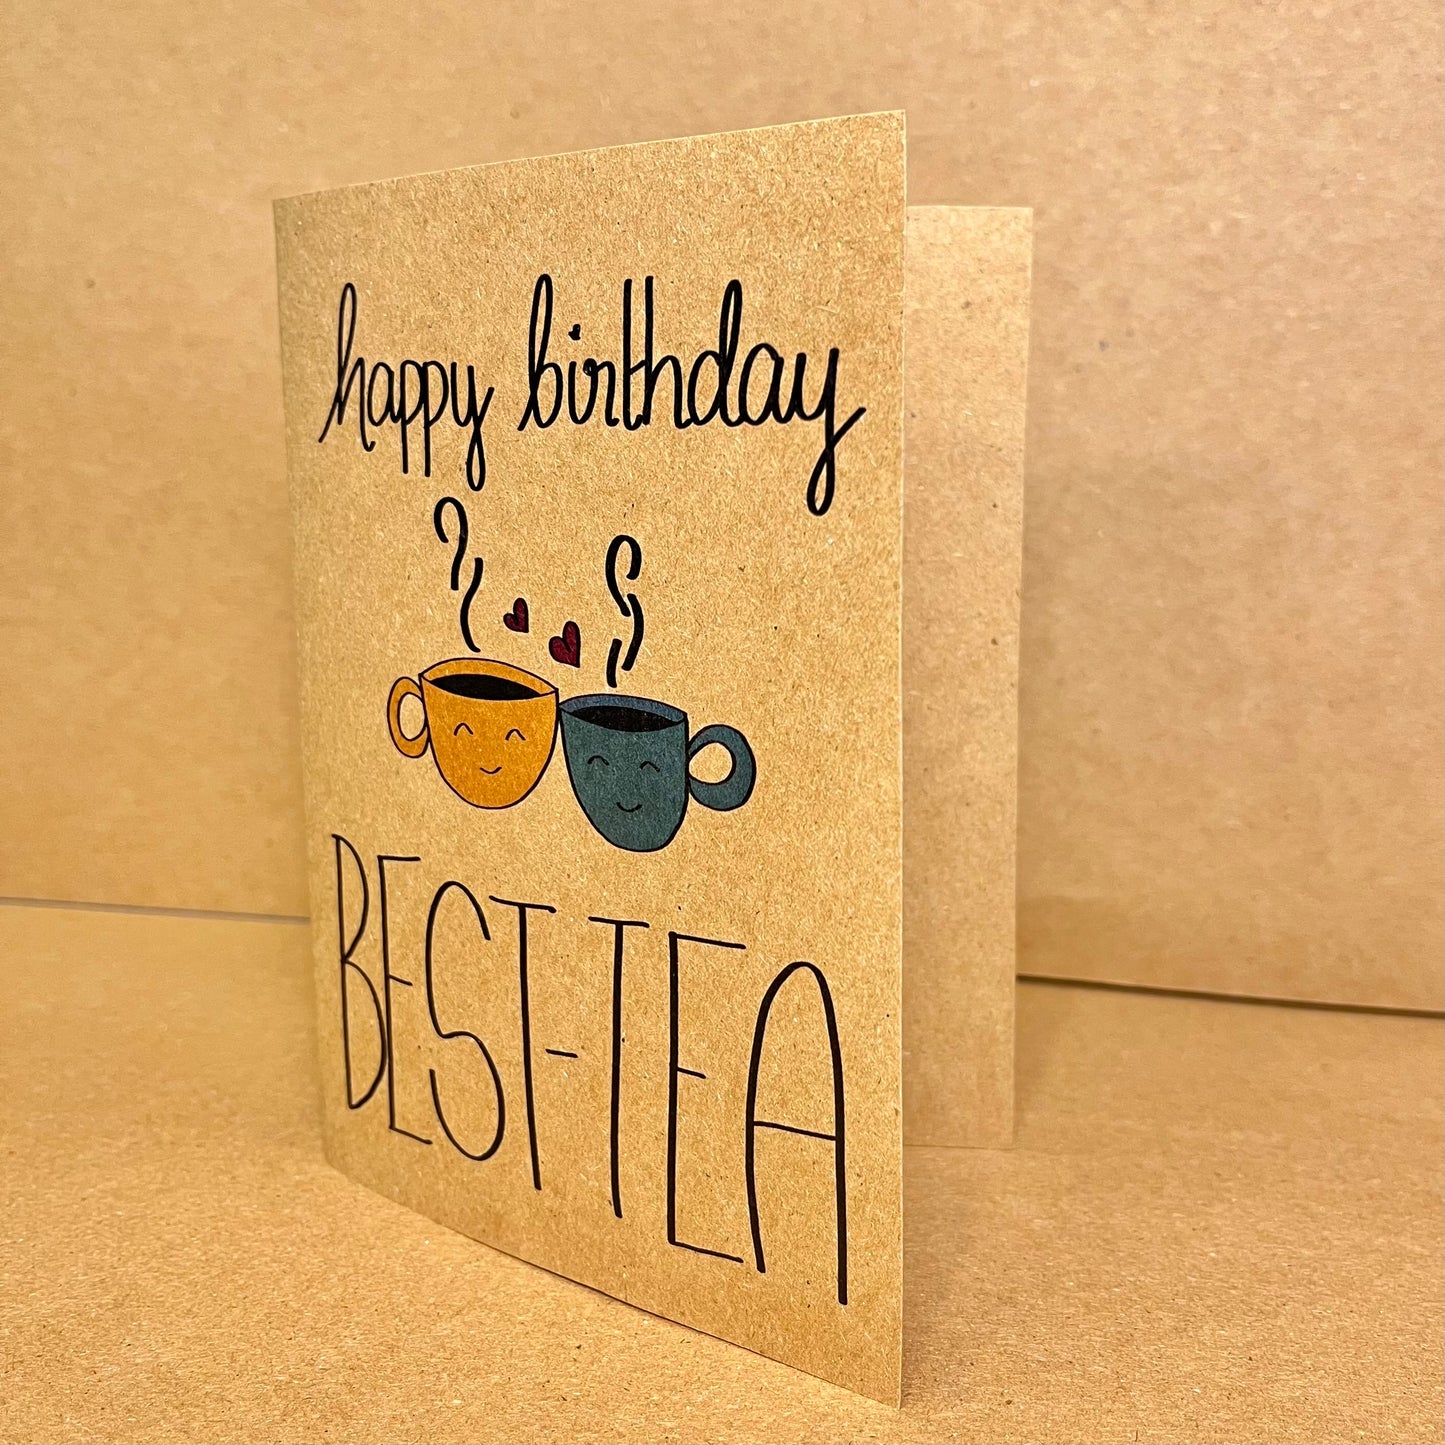 “Happy Birthday Best-Tea” Card